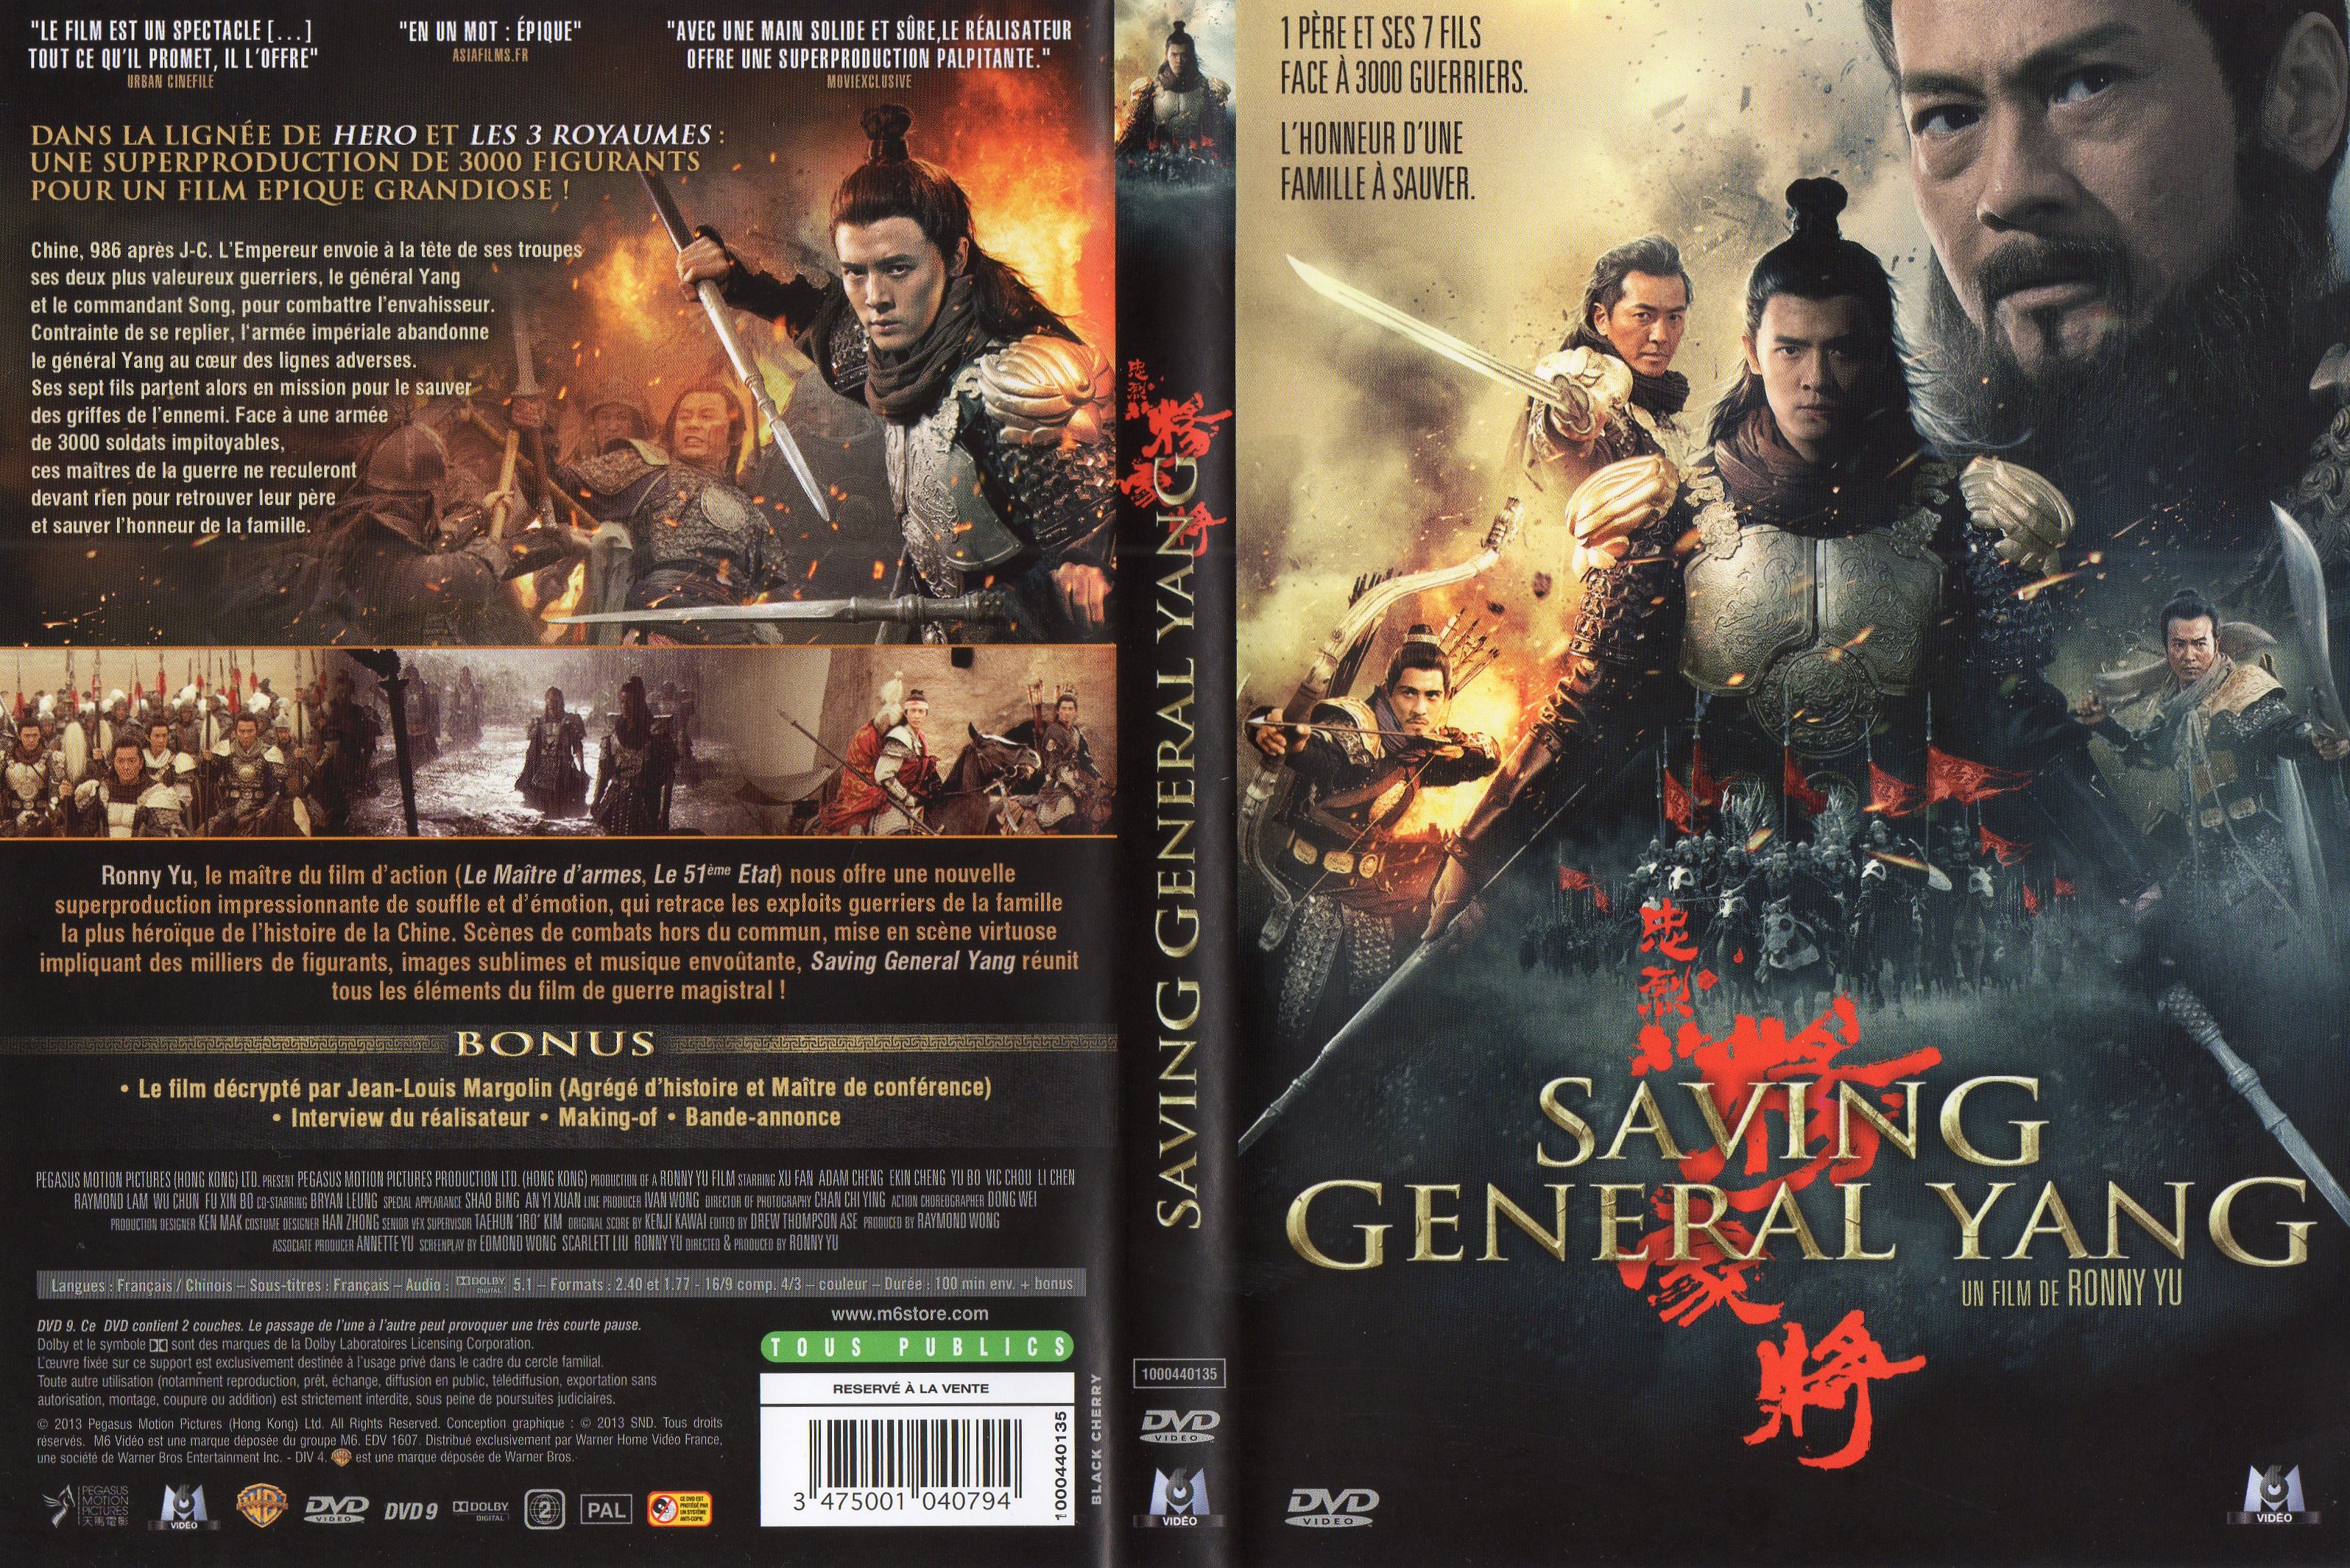 Jaquette DVD Saving general Yang